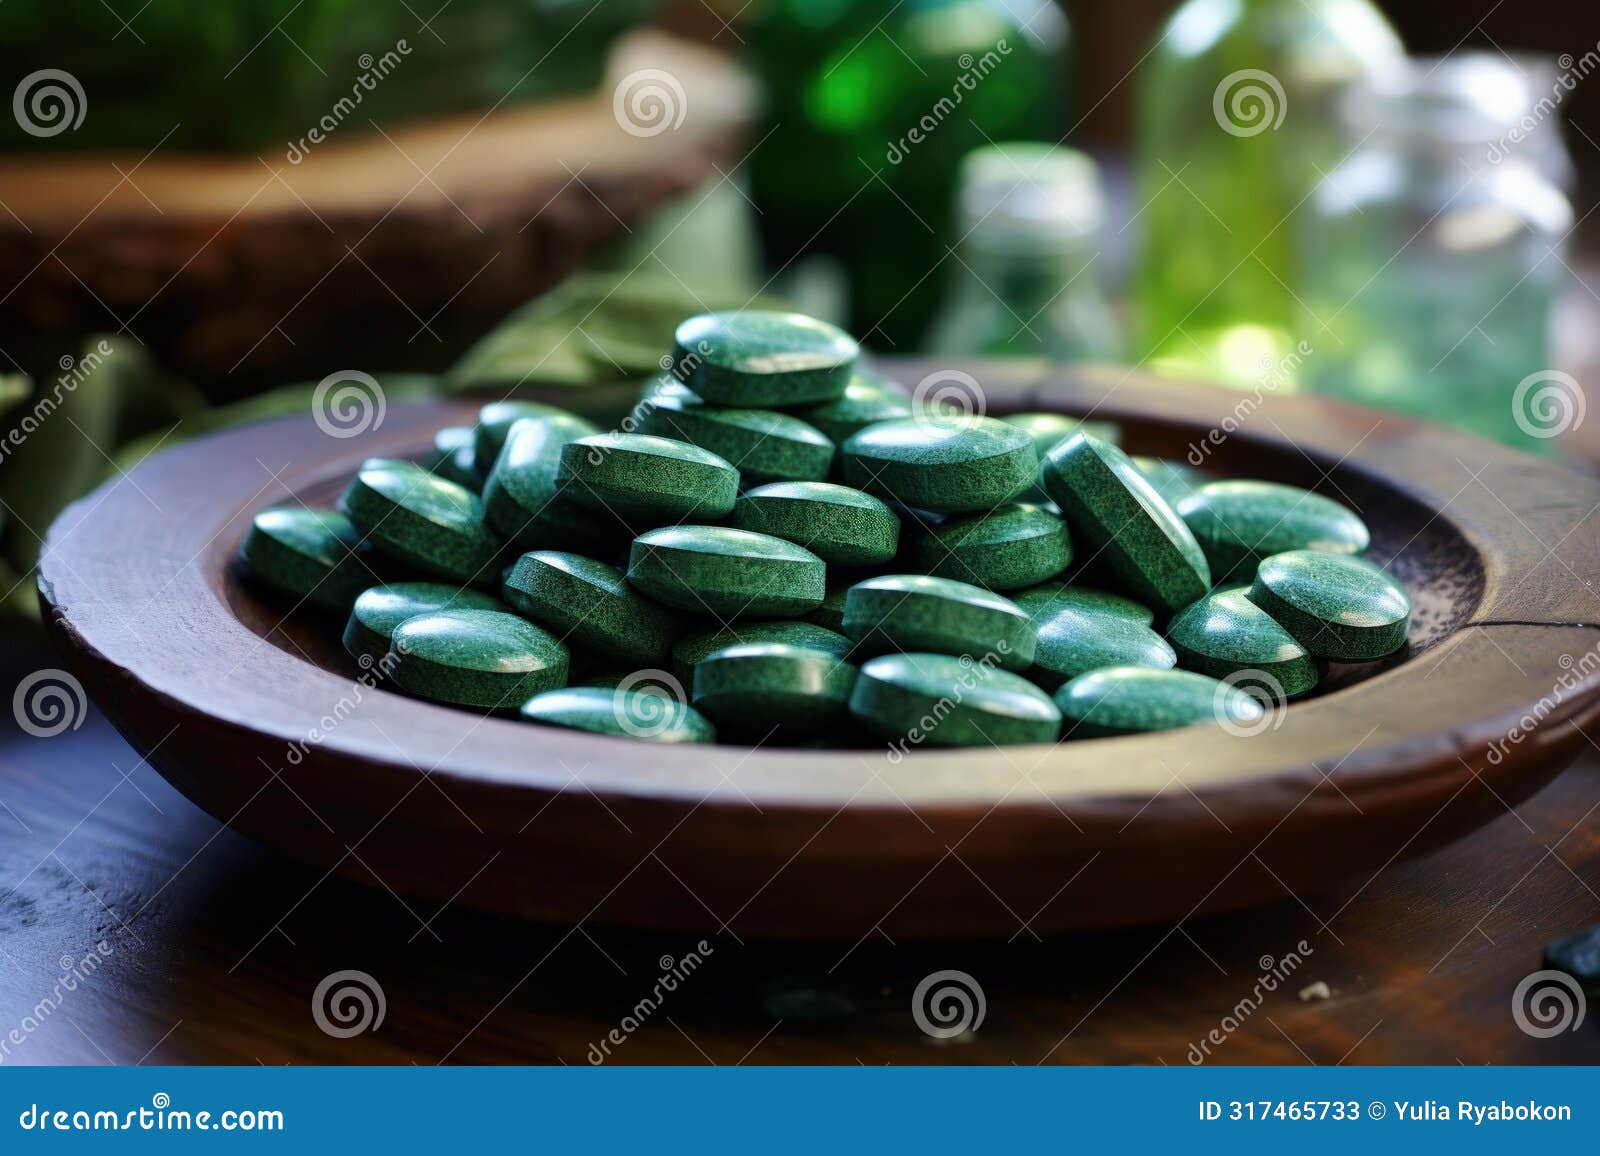 beneficial spirulina algae tablets. generate ai